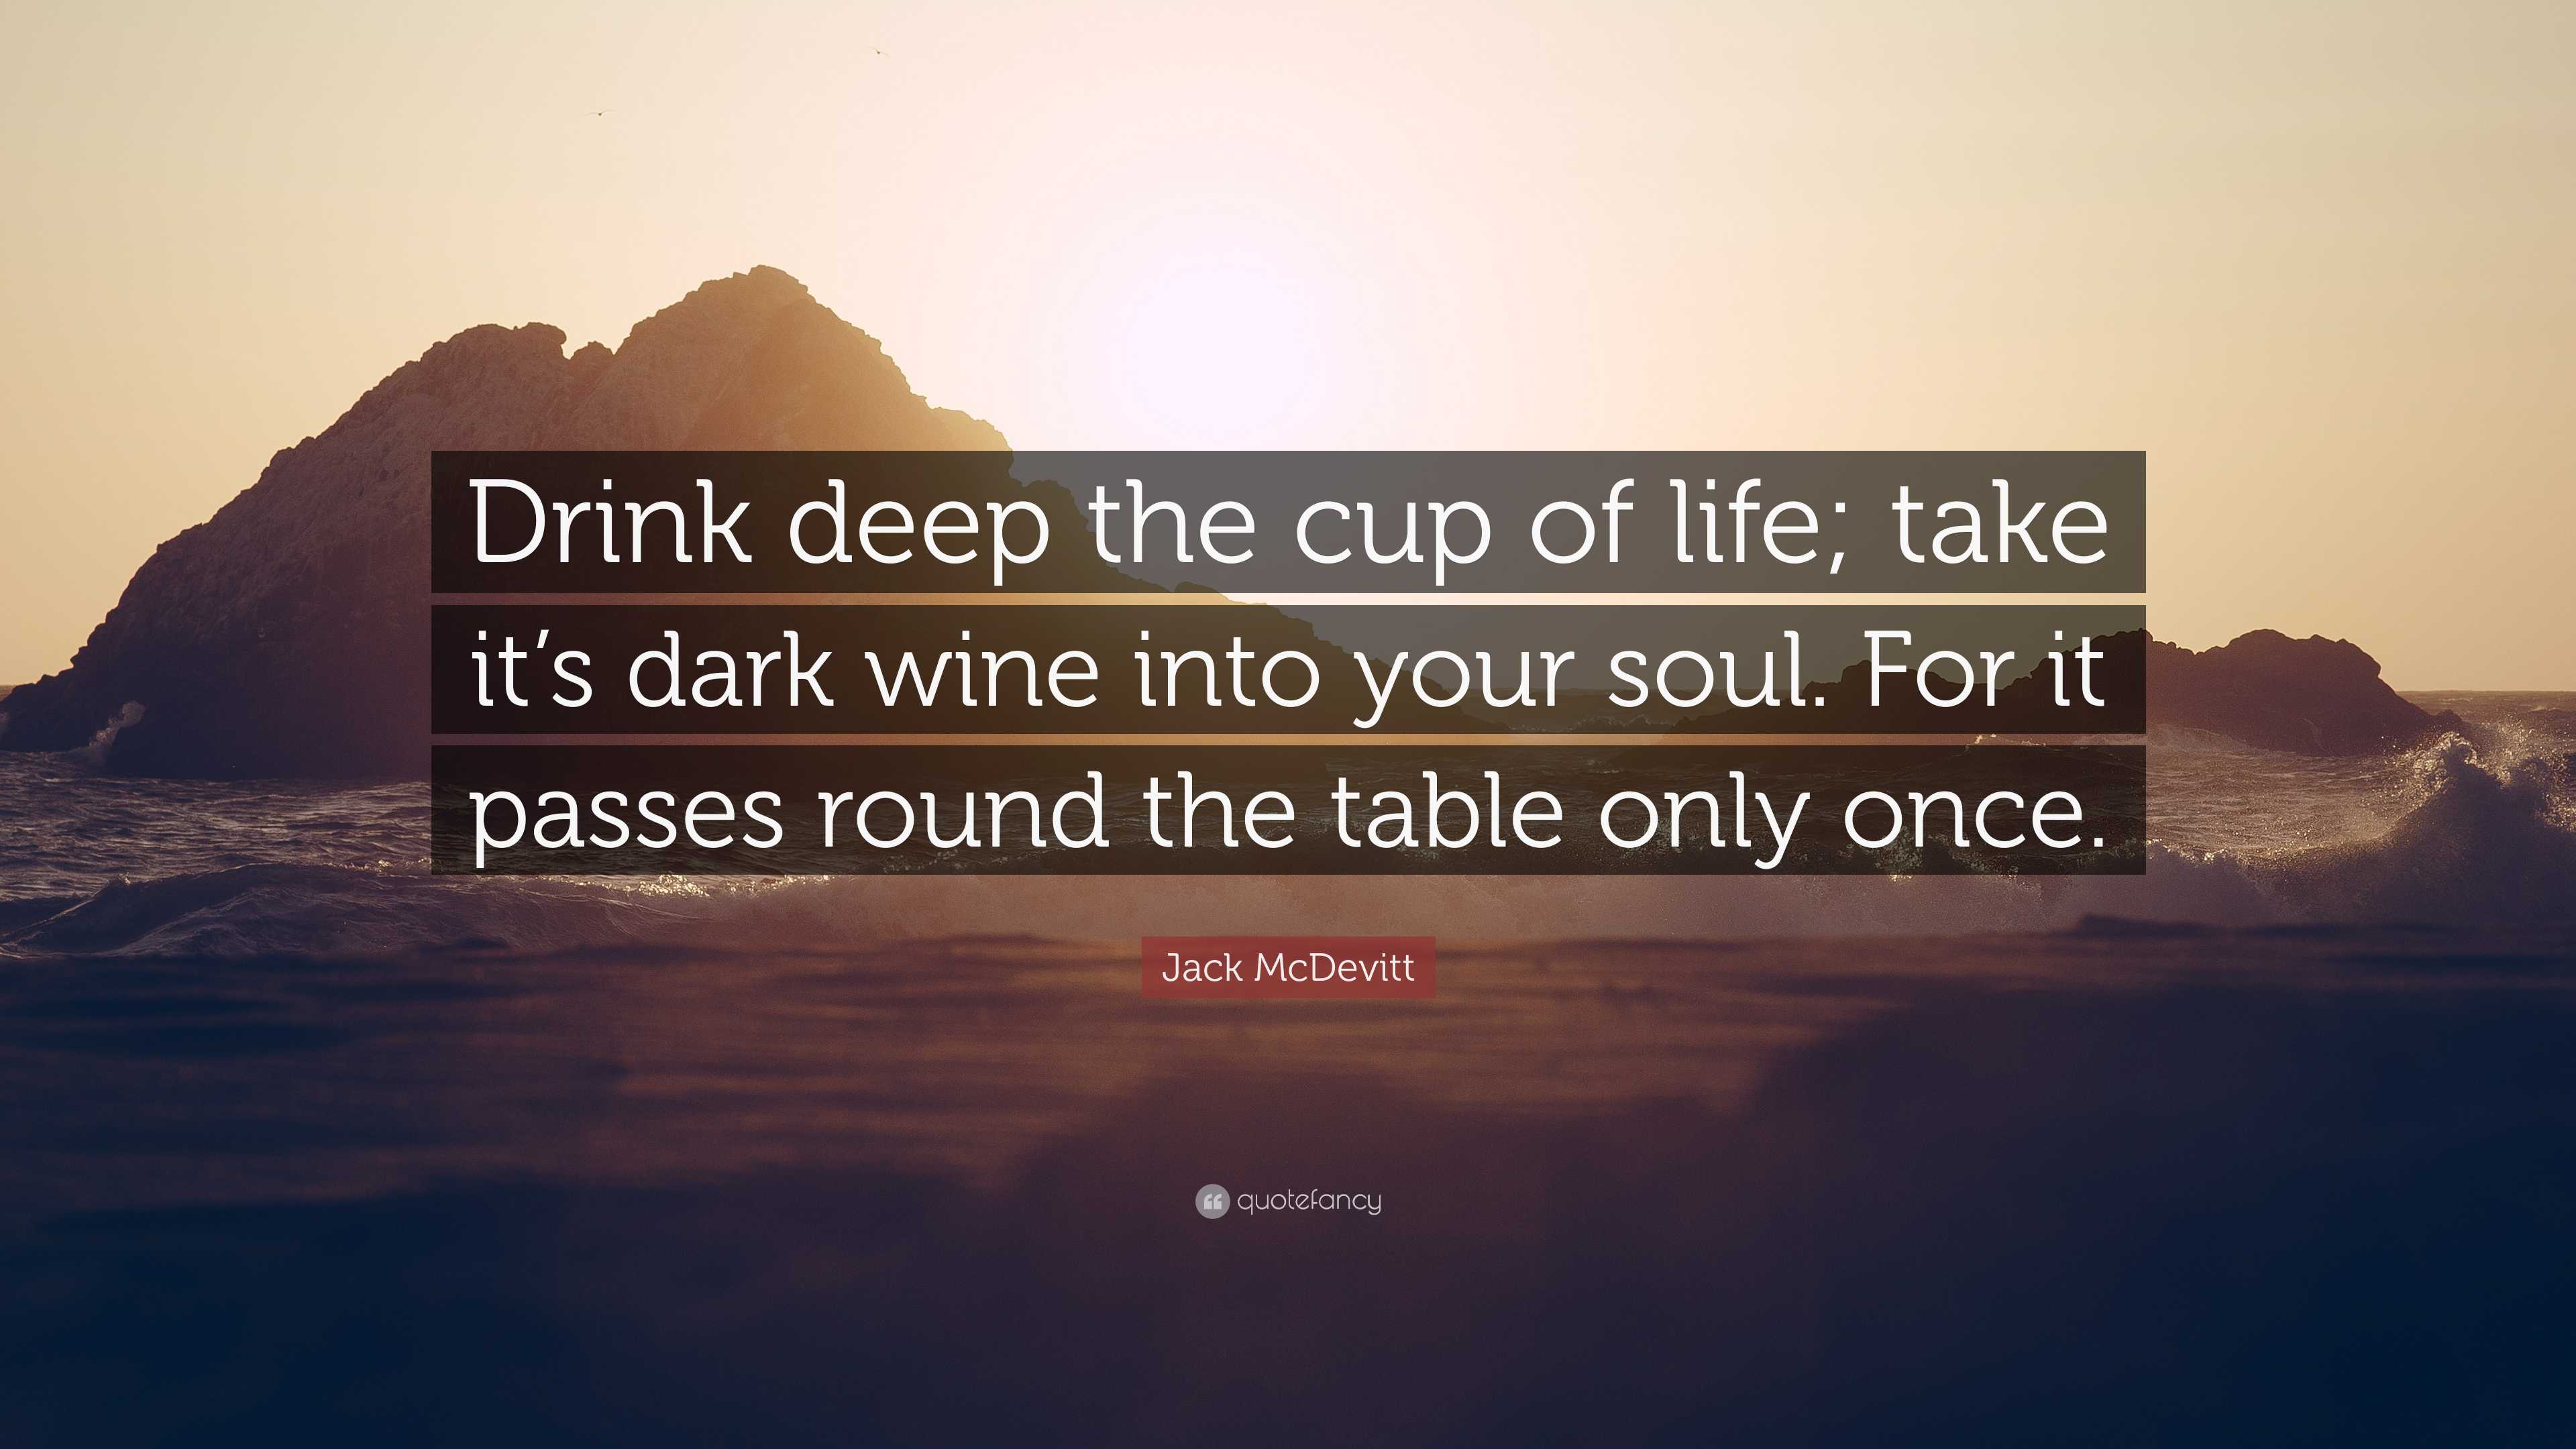 https://quotefancy.com/media/wallpaper/3840x2160/7977504-Jack-McDevitt-Quote-Drink-deep-the-cup-of-life-take-it-s-dark-wine.jpg